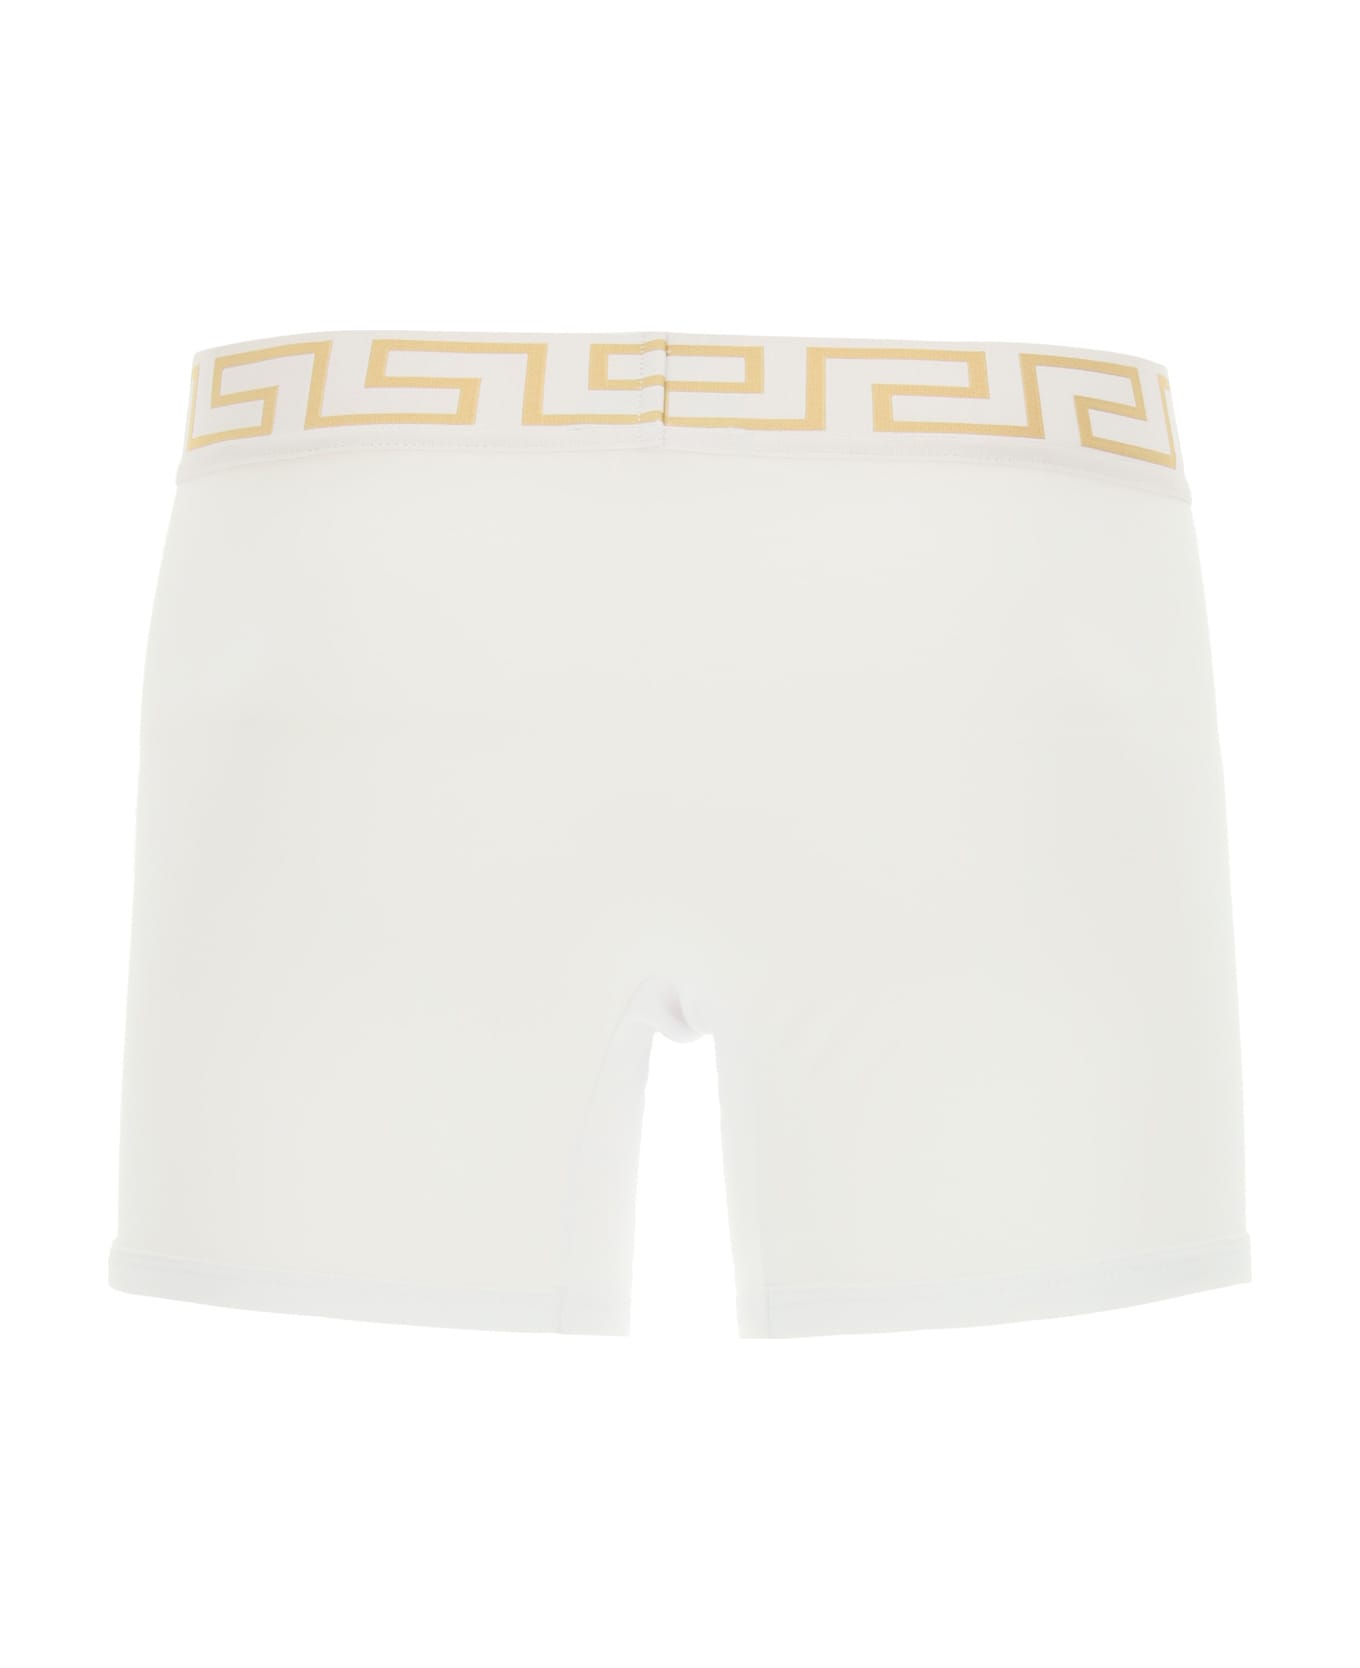 Versace Bi-pack Greca Border Boxers - H White Greek Gold